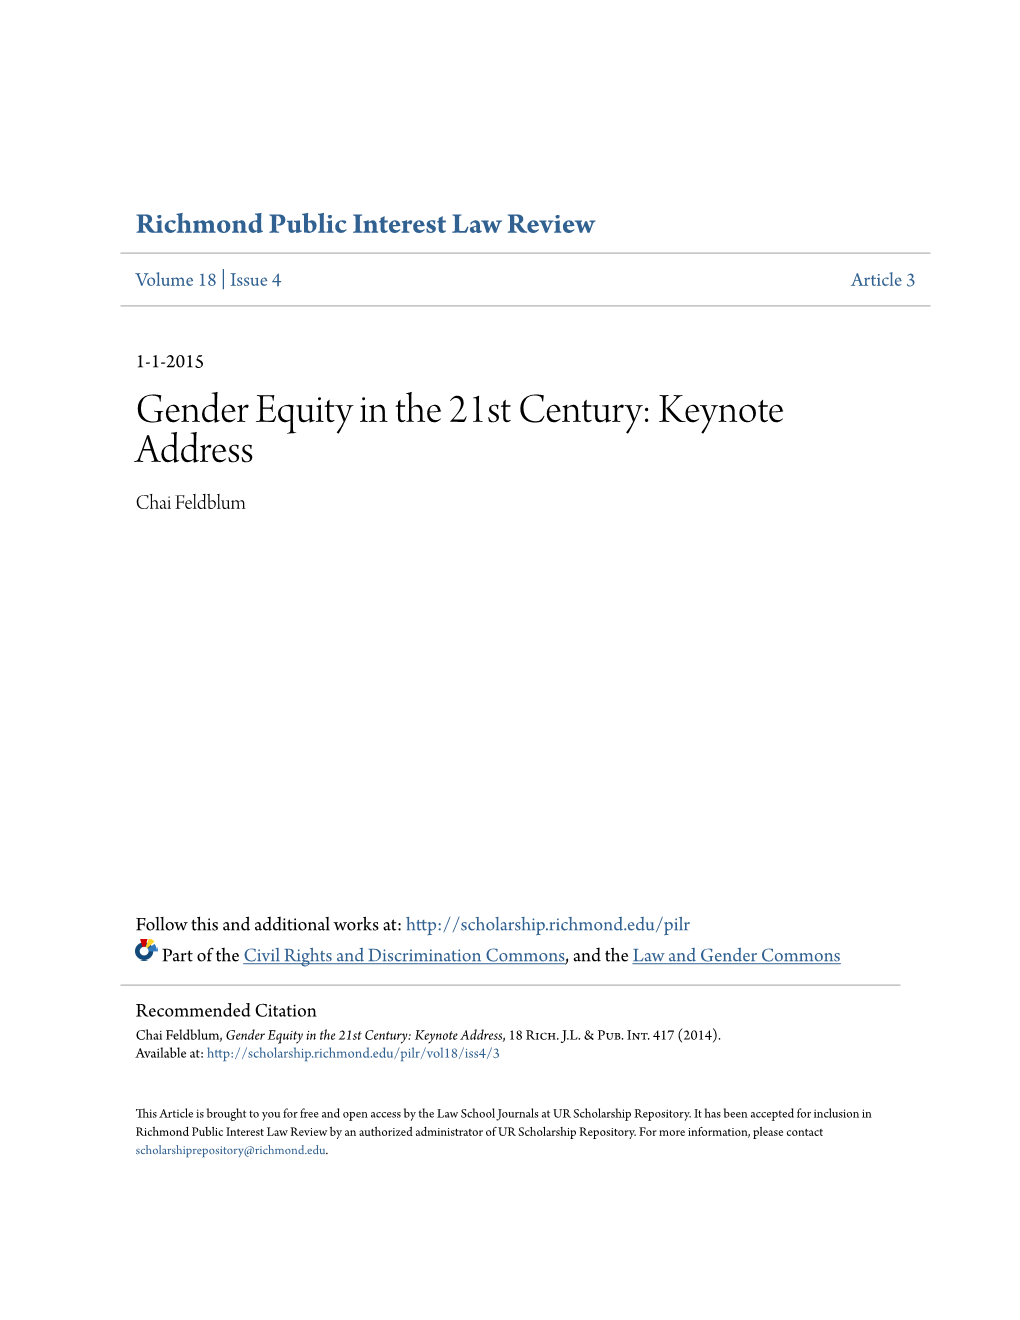 Gender Equity in the 21St Century: Keynote Address Chai Feldblum